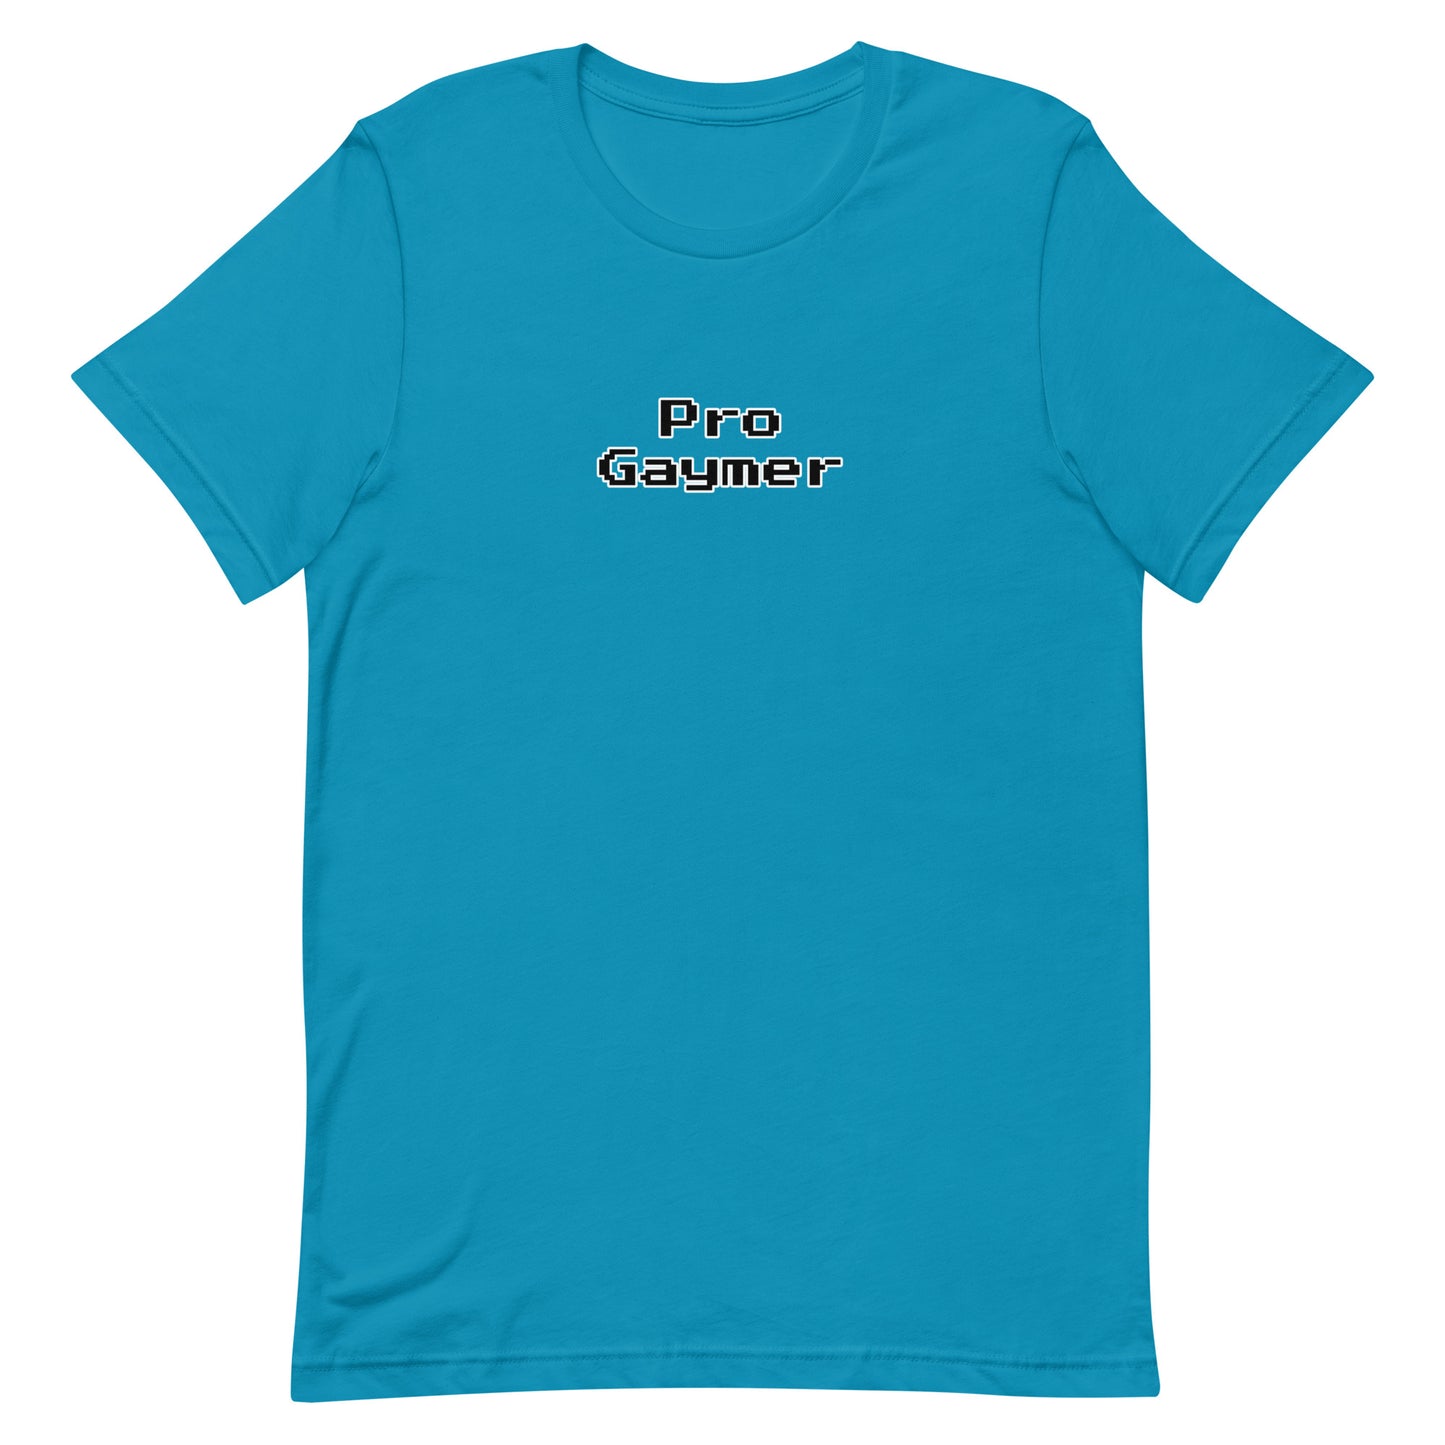 Pro Gaymer - T-Shirt (B) - Solid colors